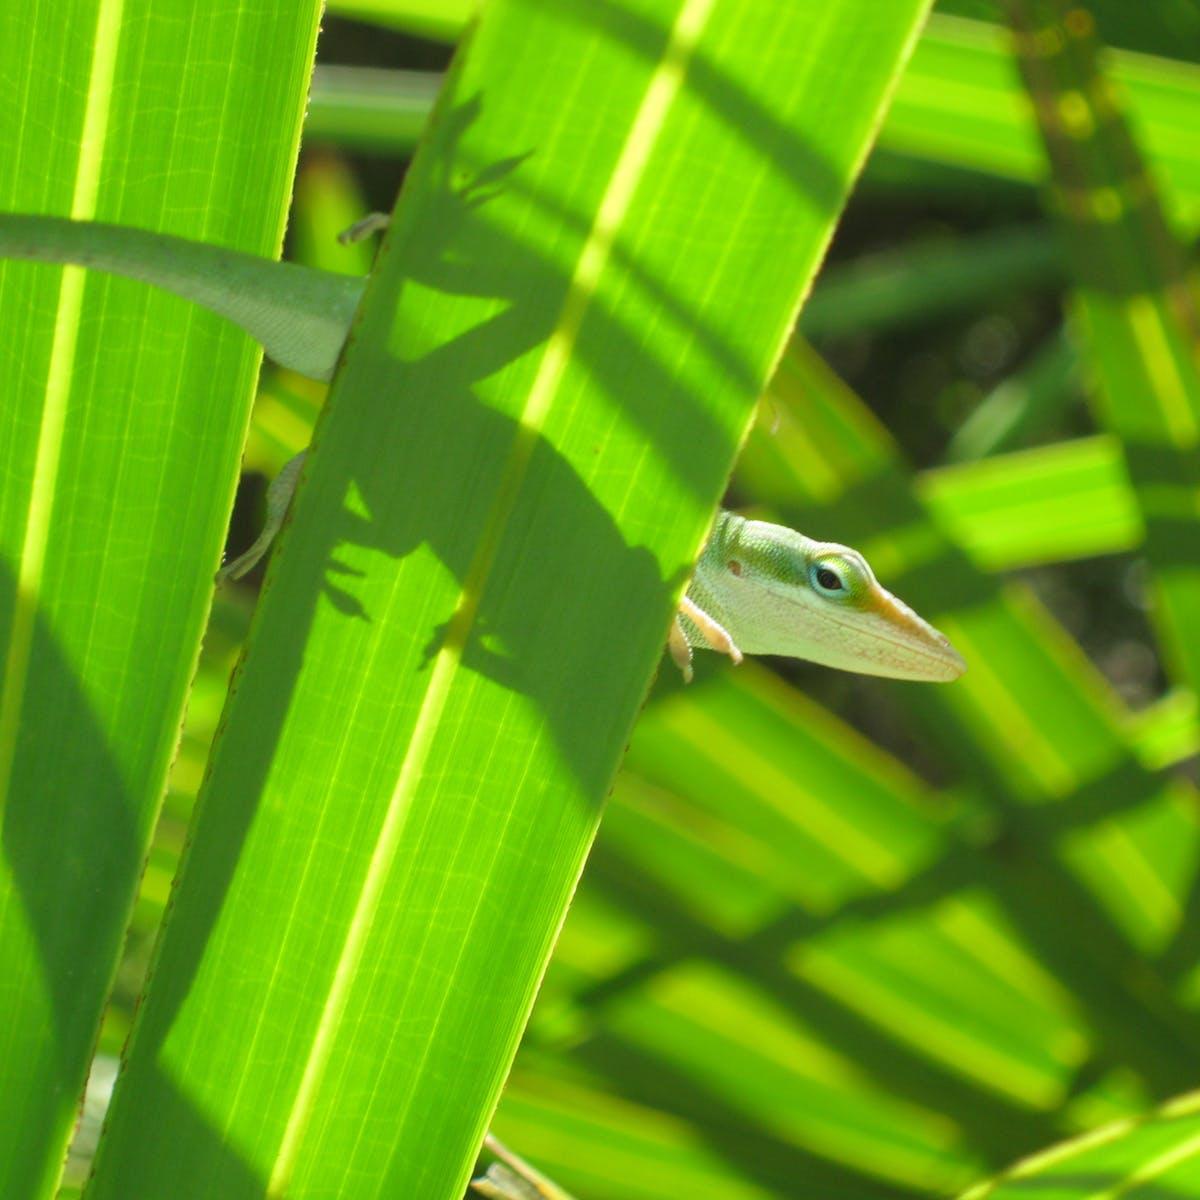 Invasive species trigger rapid evolution for lizards in Florida